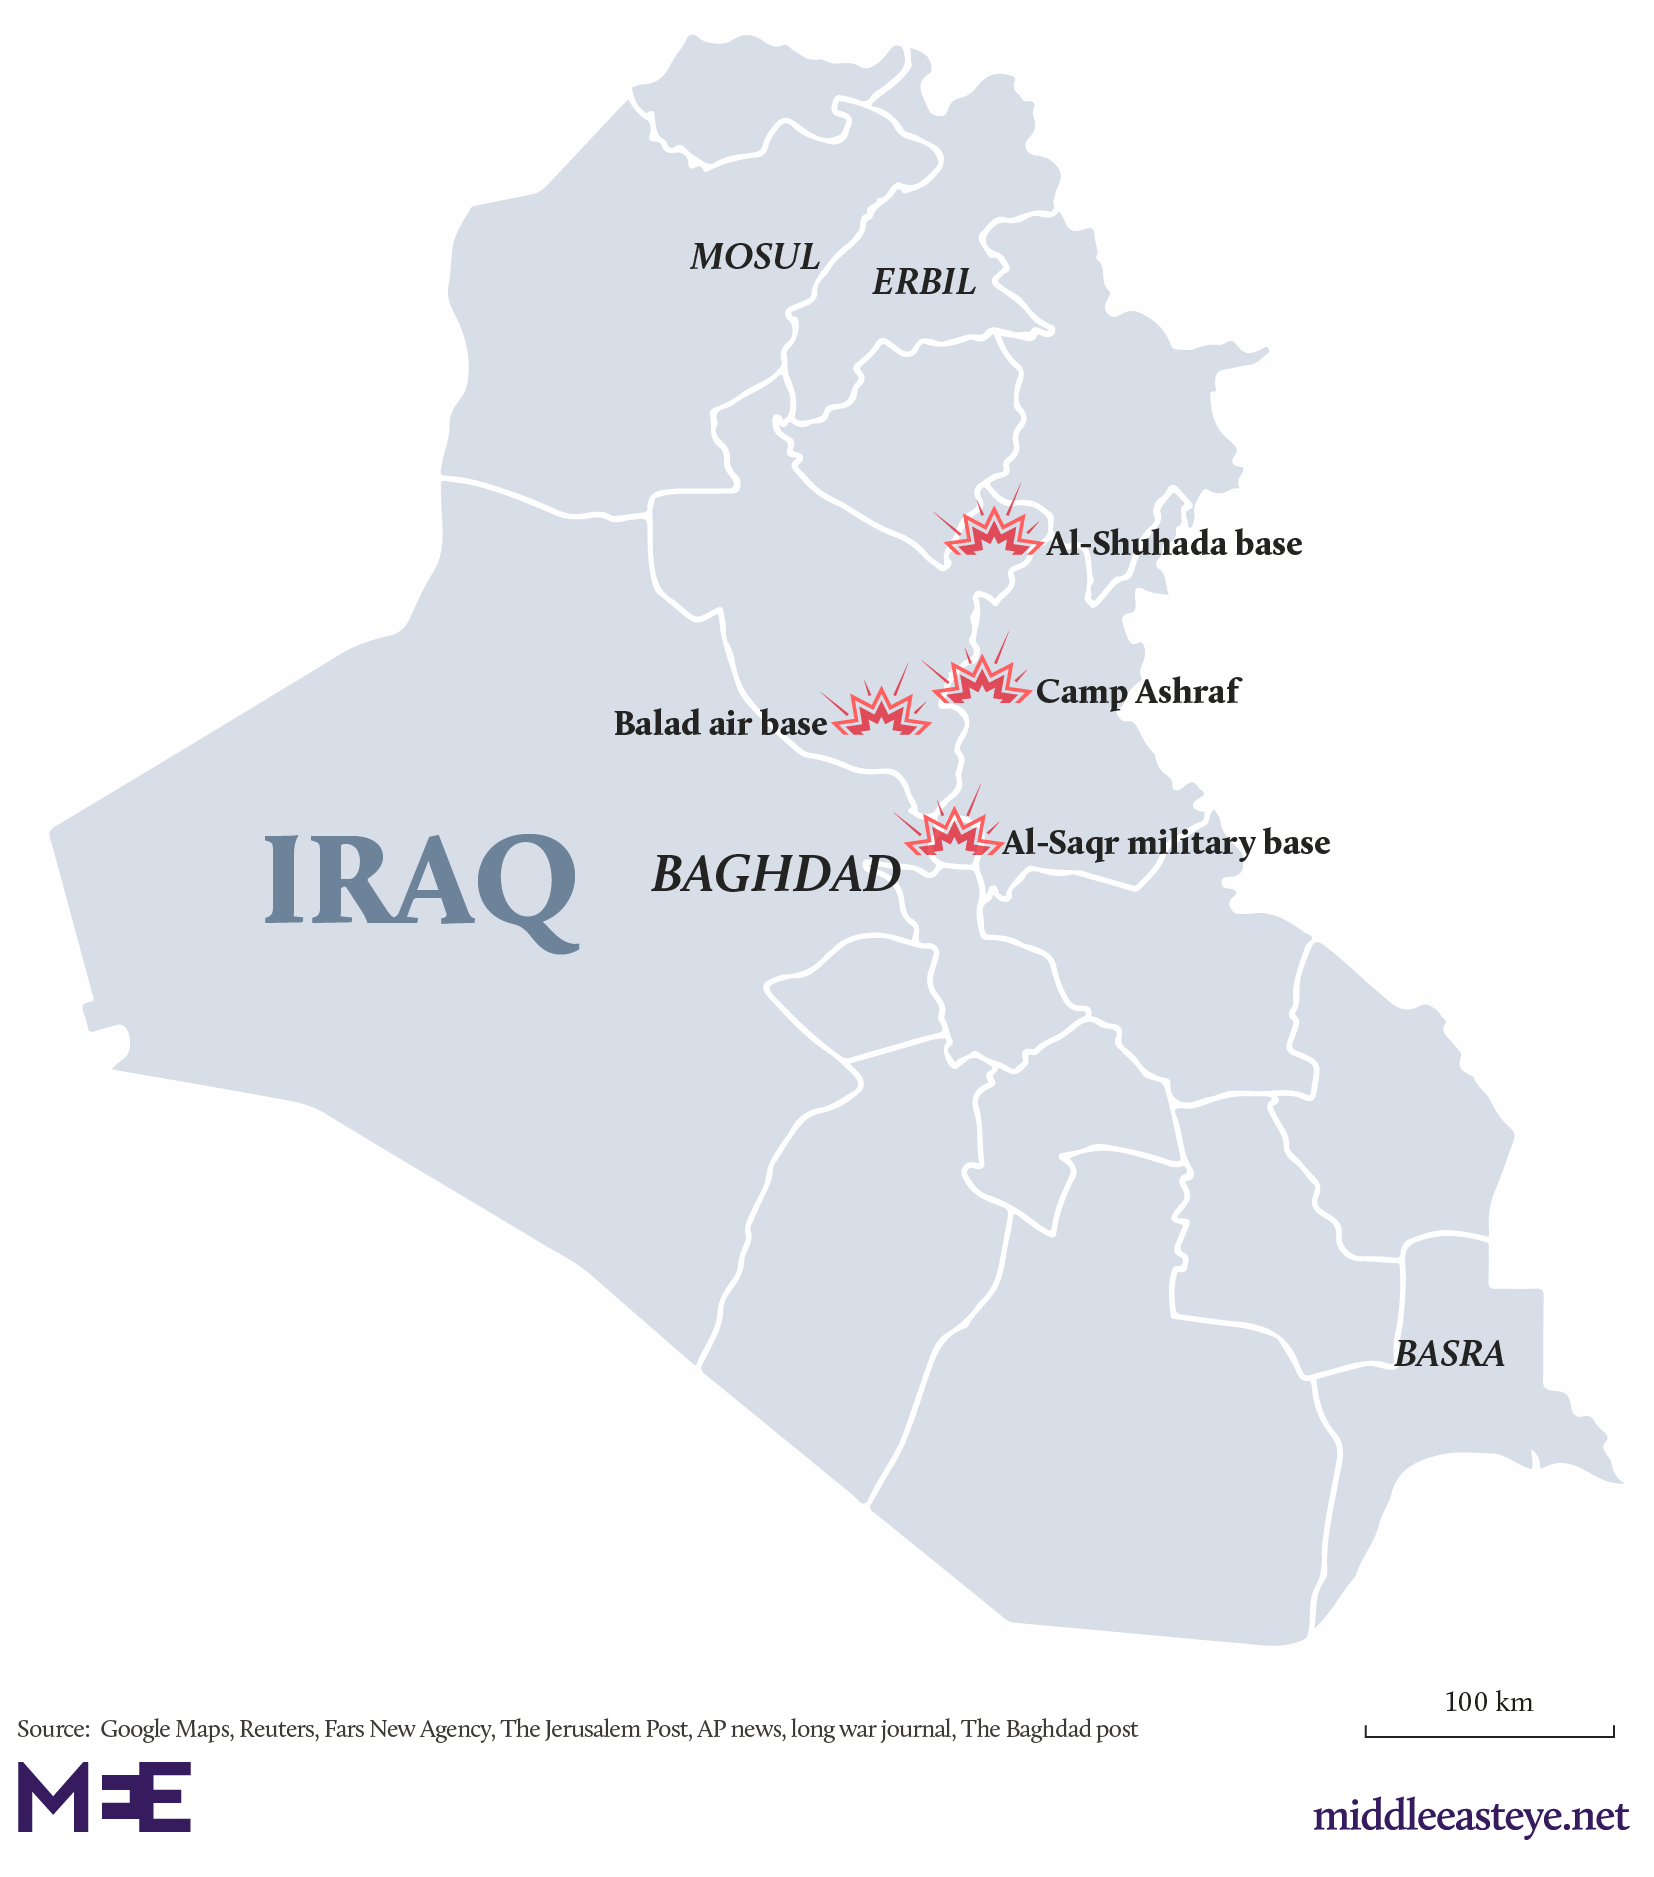 Iraq bases attack map